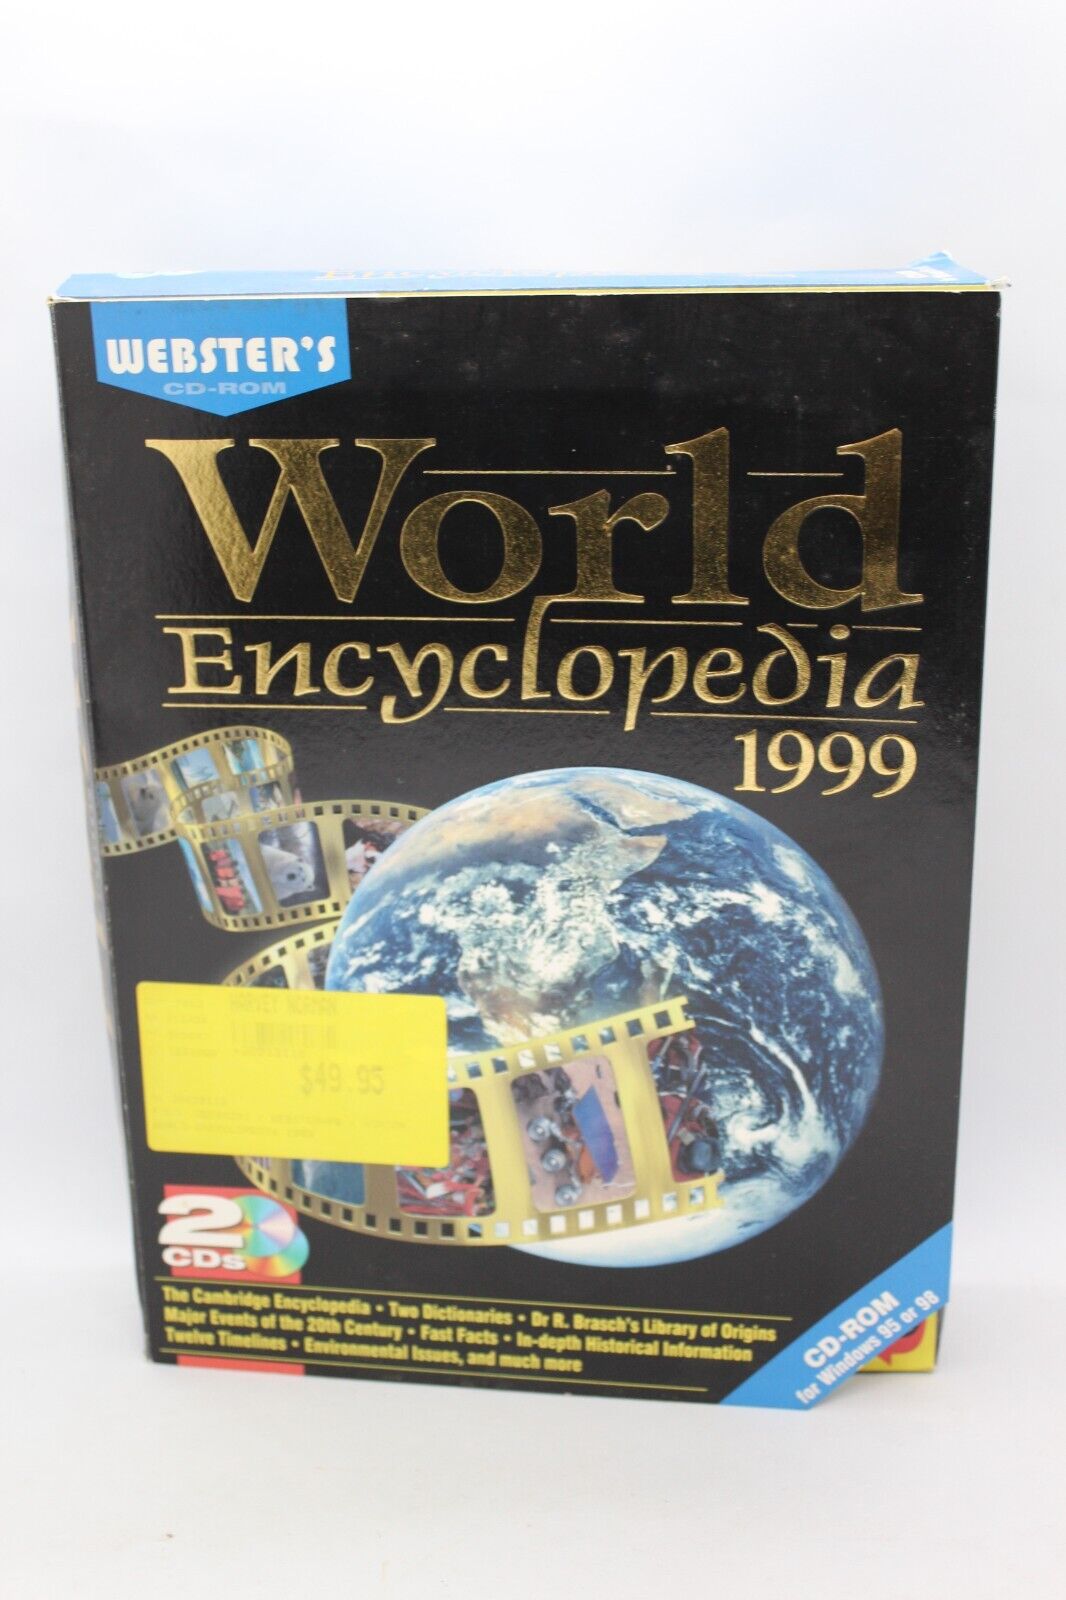 VINTAGE WORLD ENCYCLOPEDIA 1999 BIG BOX PC SOFTWARE WINDOWS 95